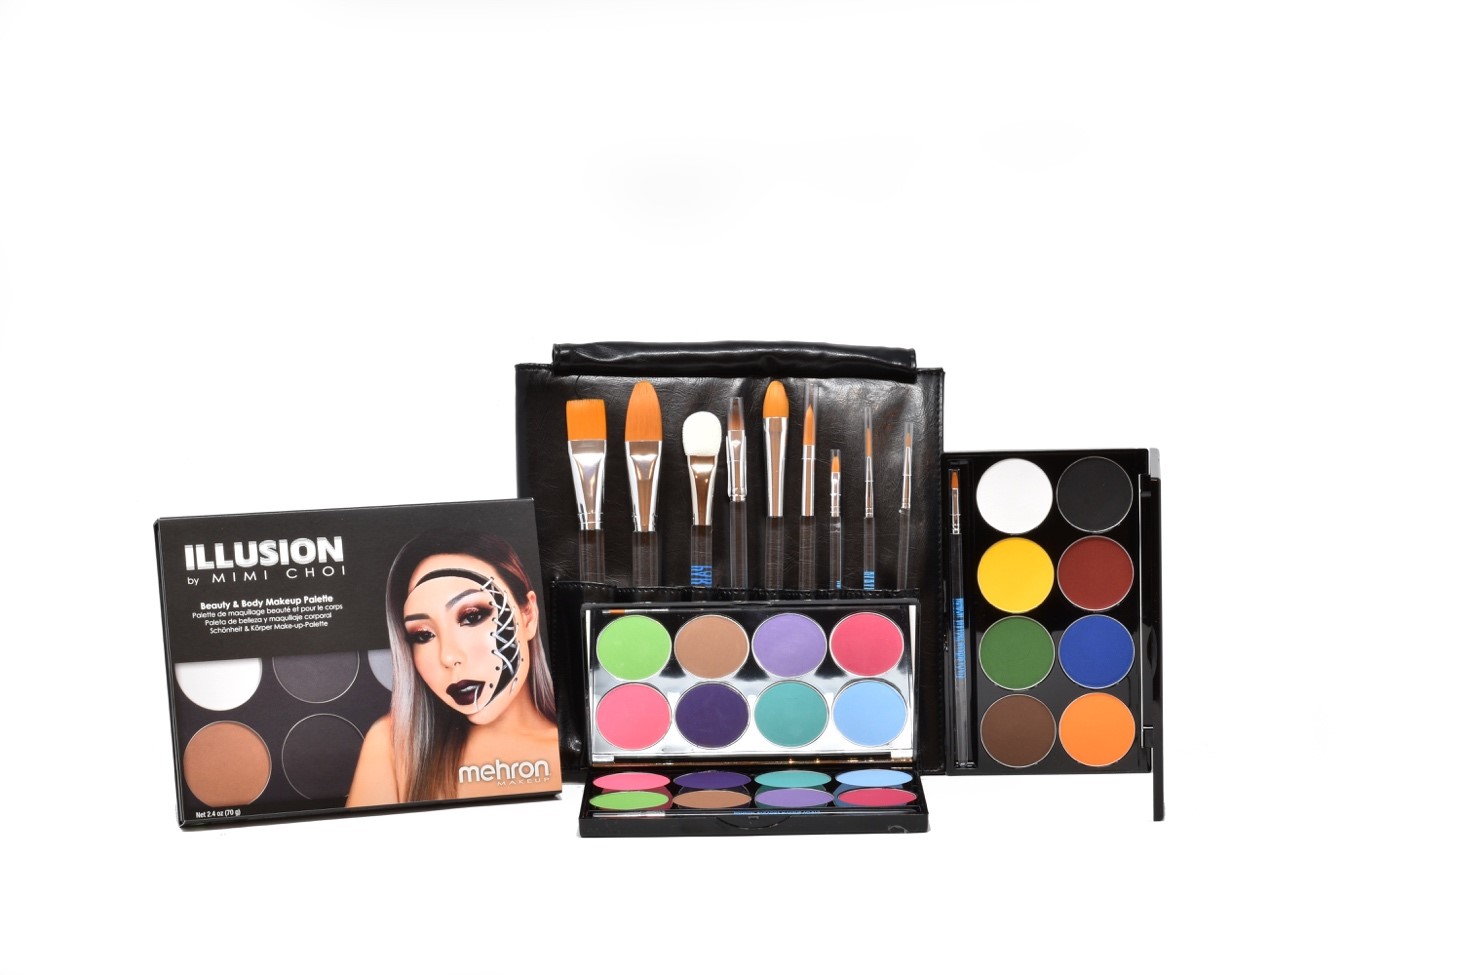 Mehron Makeup Pro Tools